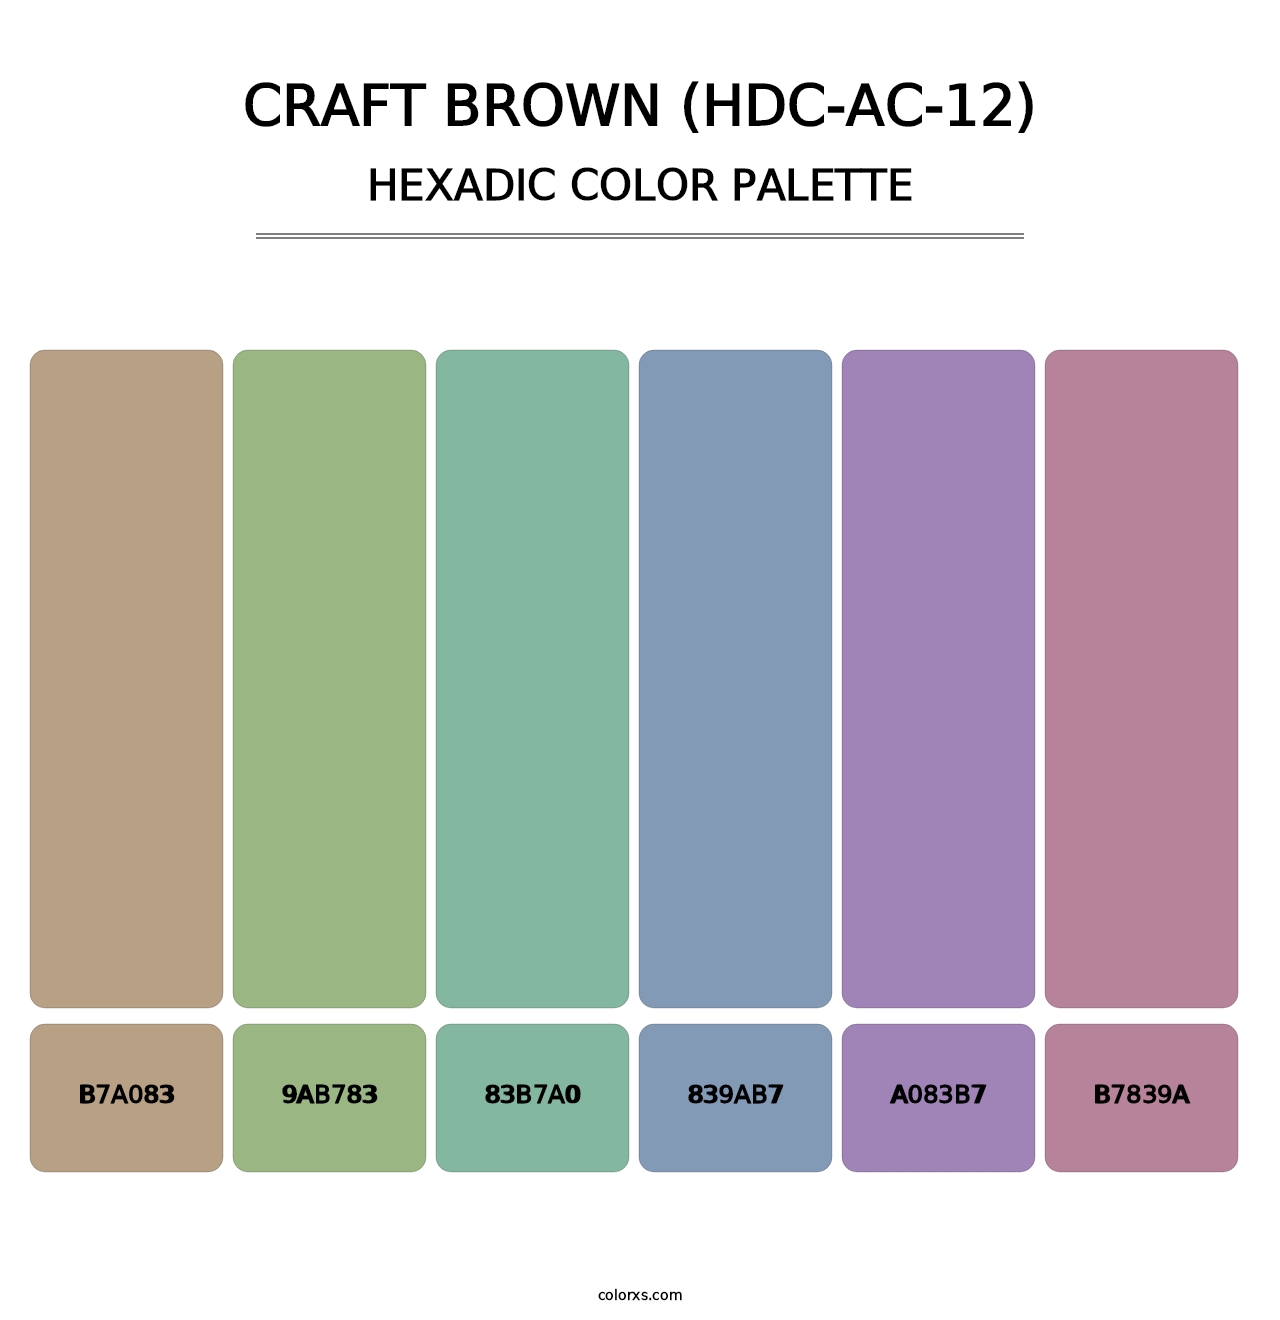 Craft Brown (HDC-AC-12) - Hexadic Color Palette